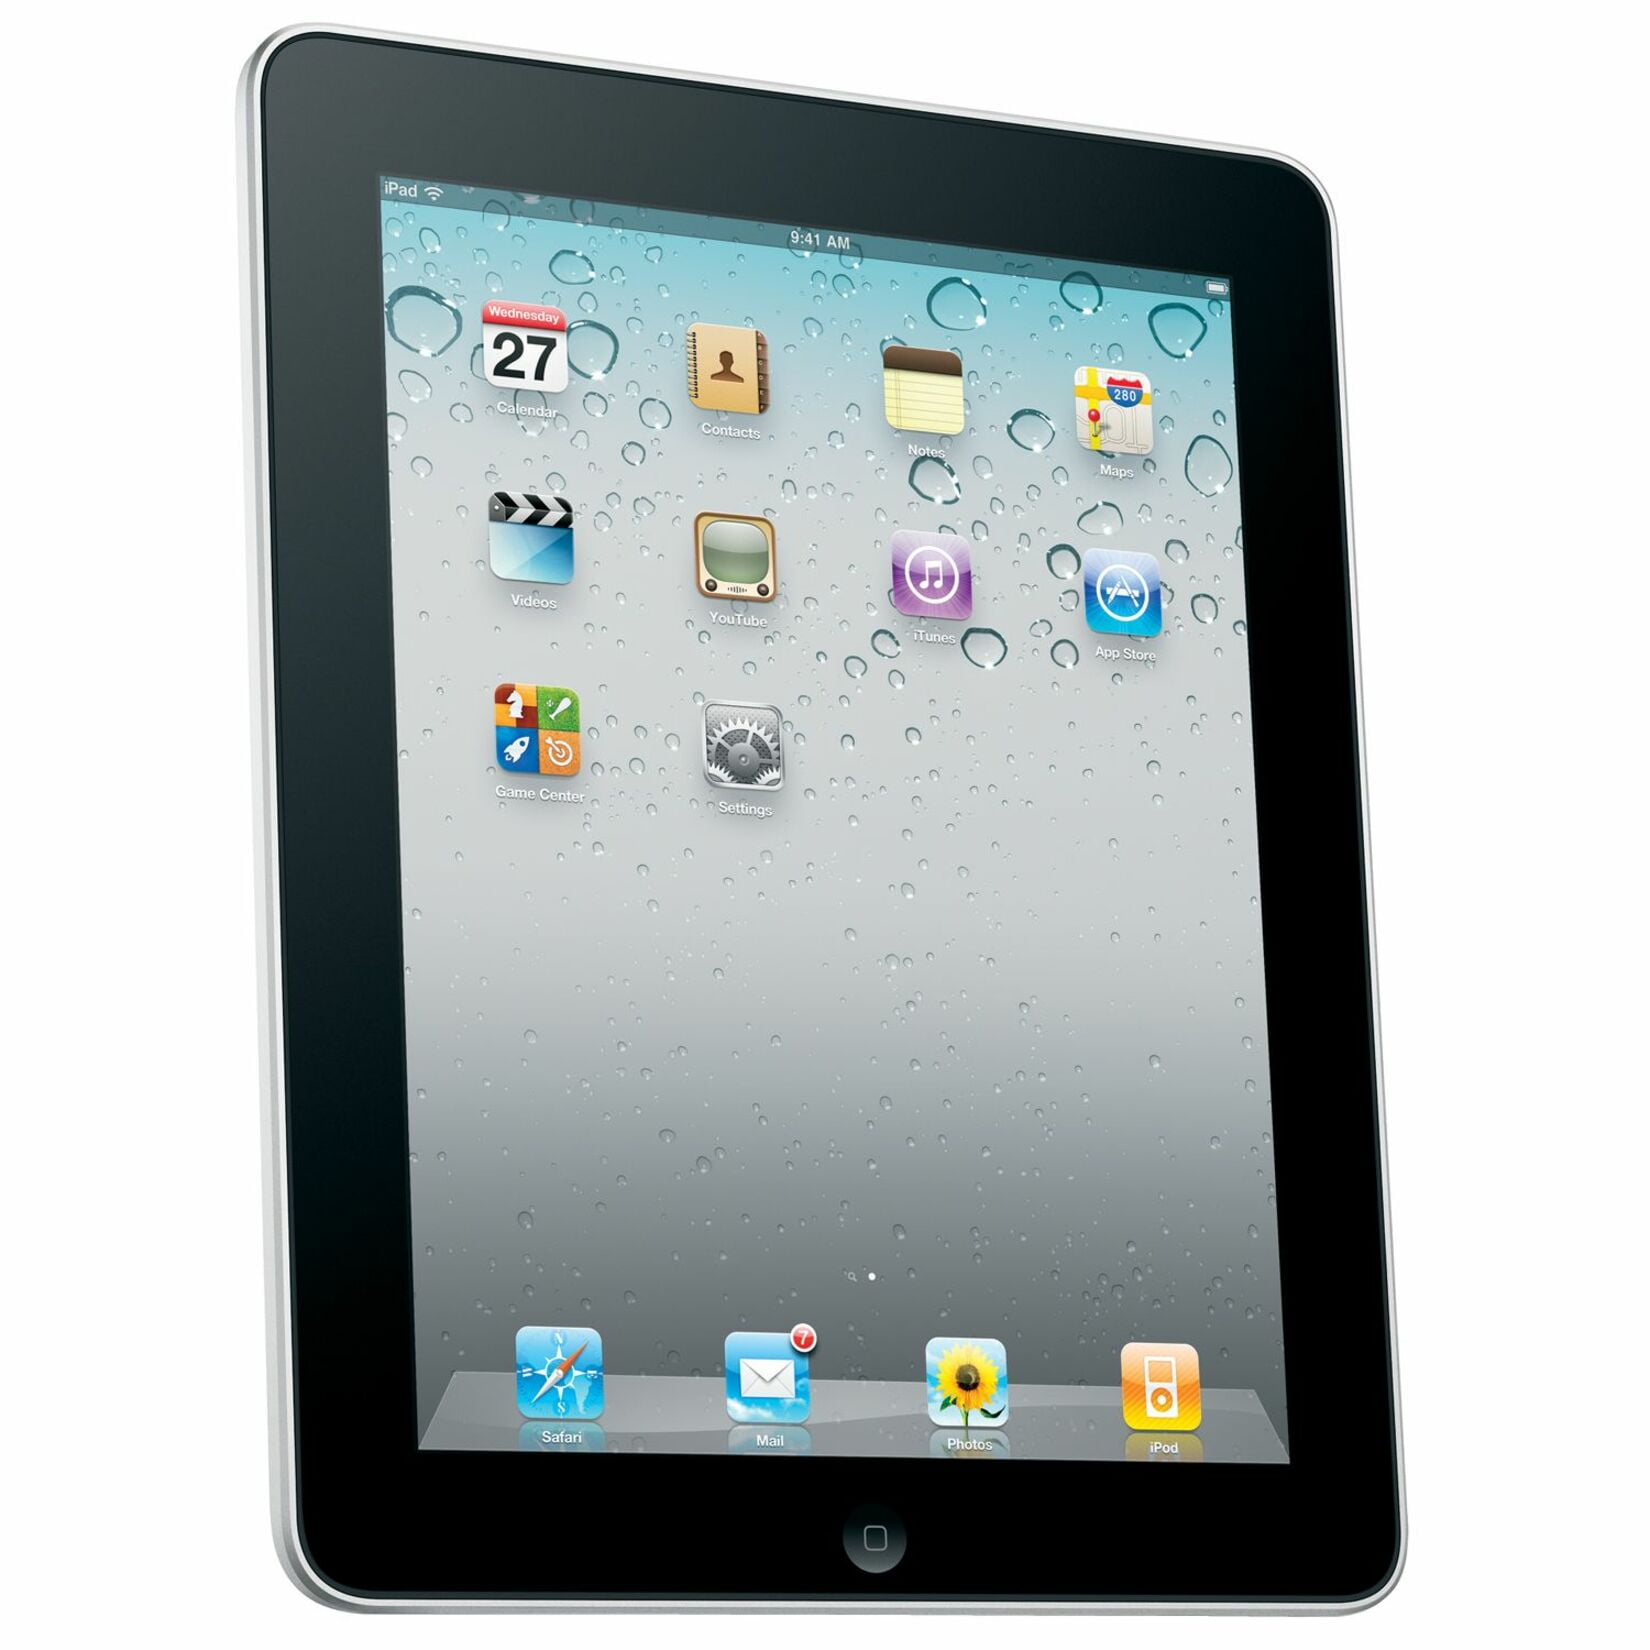 Underholde til stede Dolke Apple iPad 2 MC954LL/A Tablet, 9.7" XGA, Cortex A9 Dual-core (2 Core) 1  GHz, 16 GB Storage, iOS 7, Black - Walmart.com